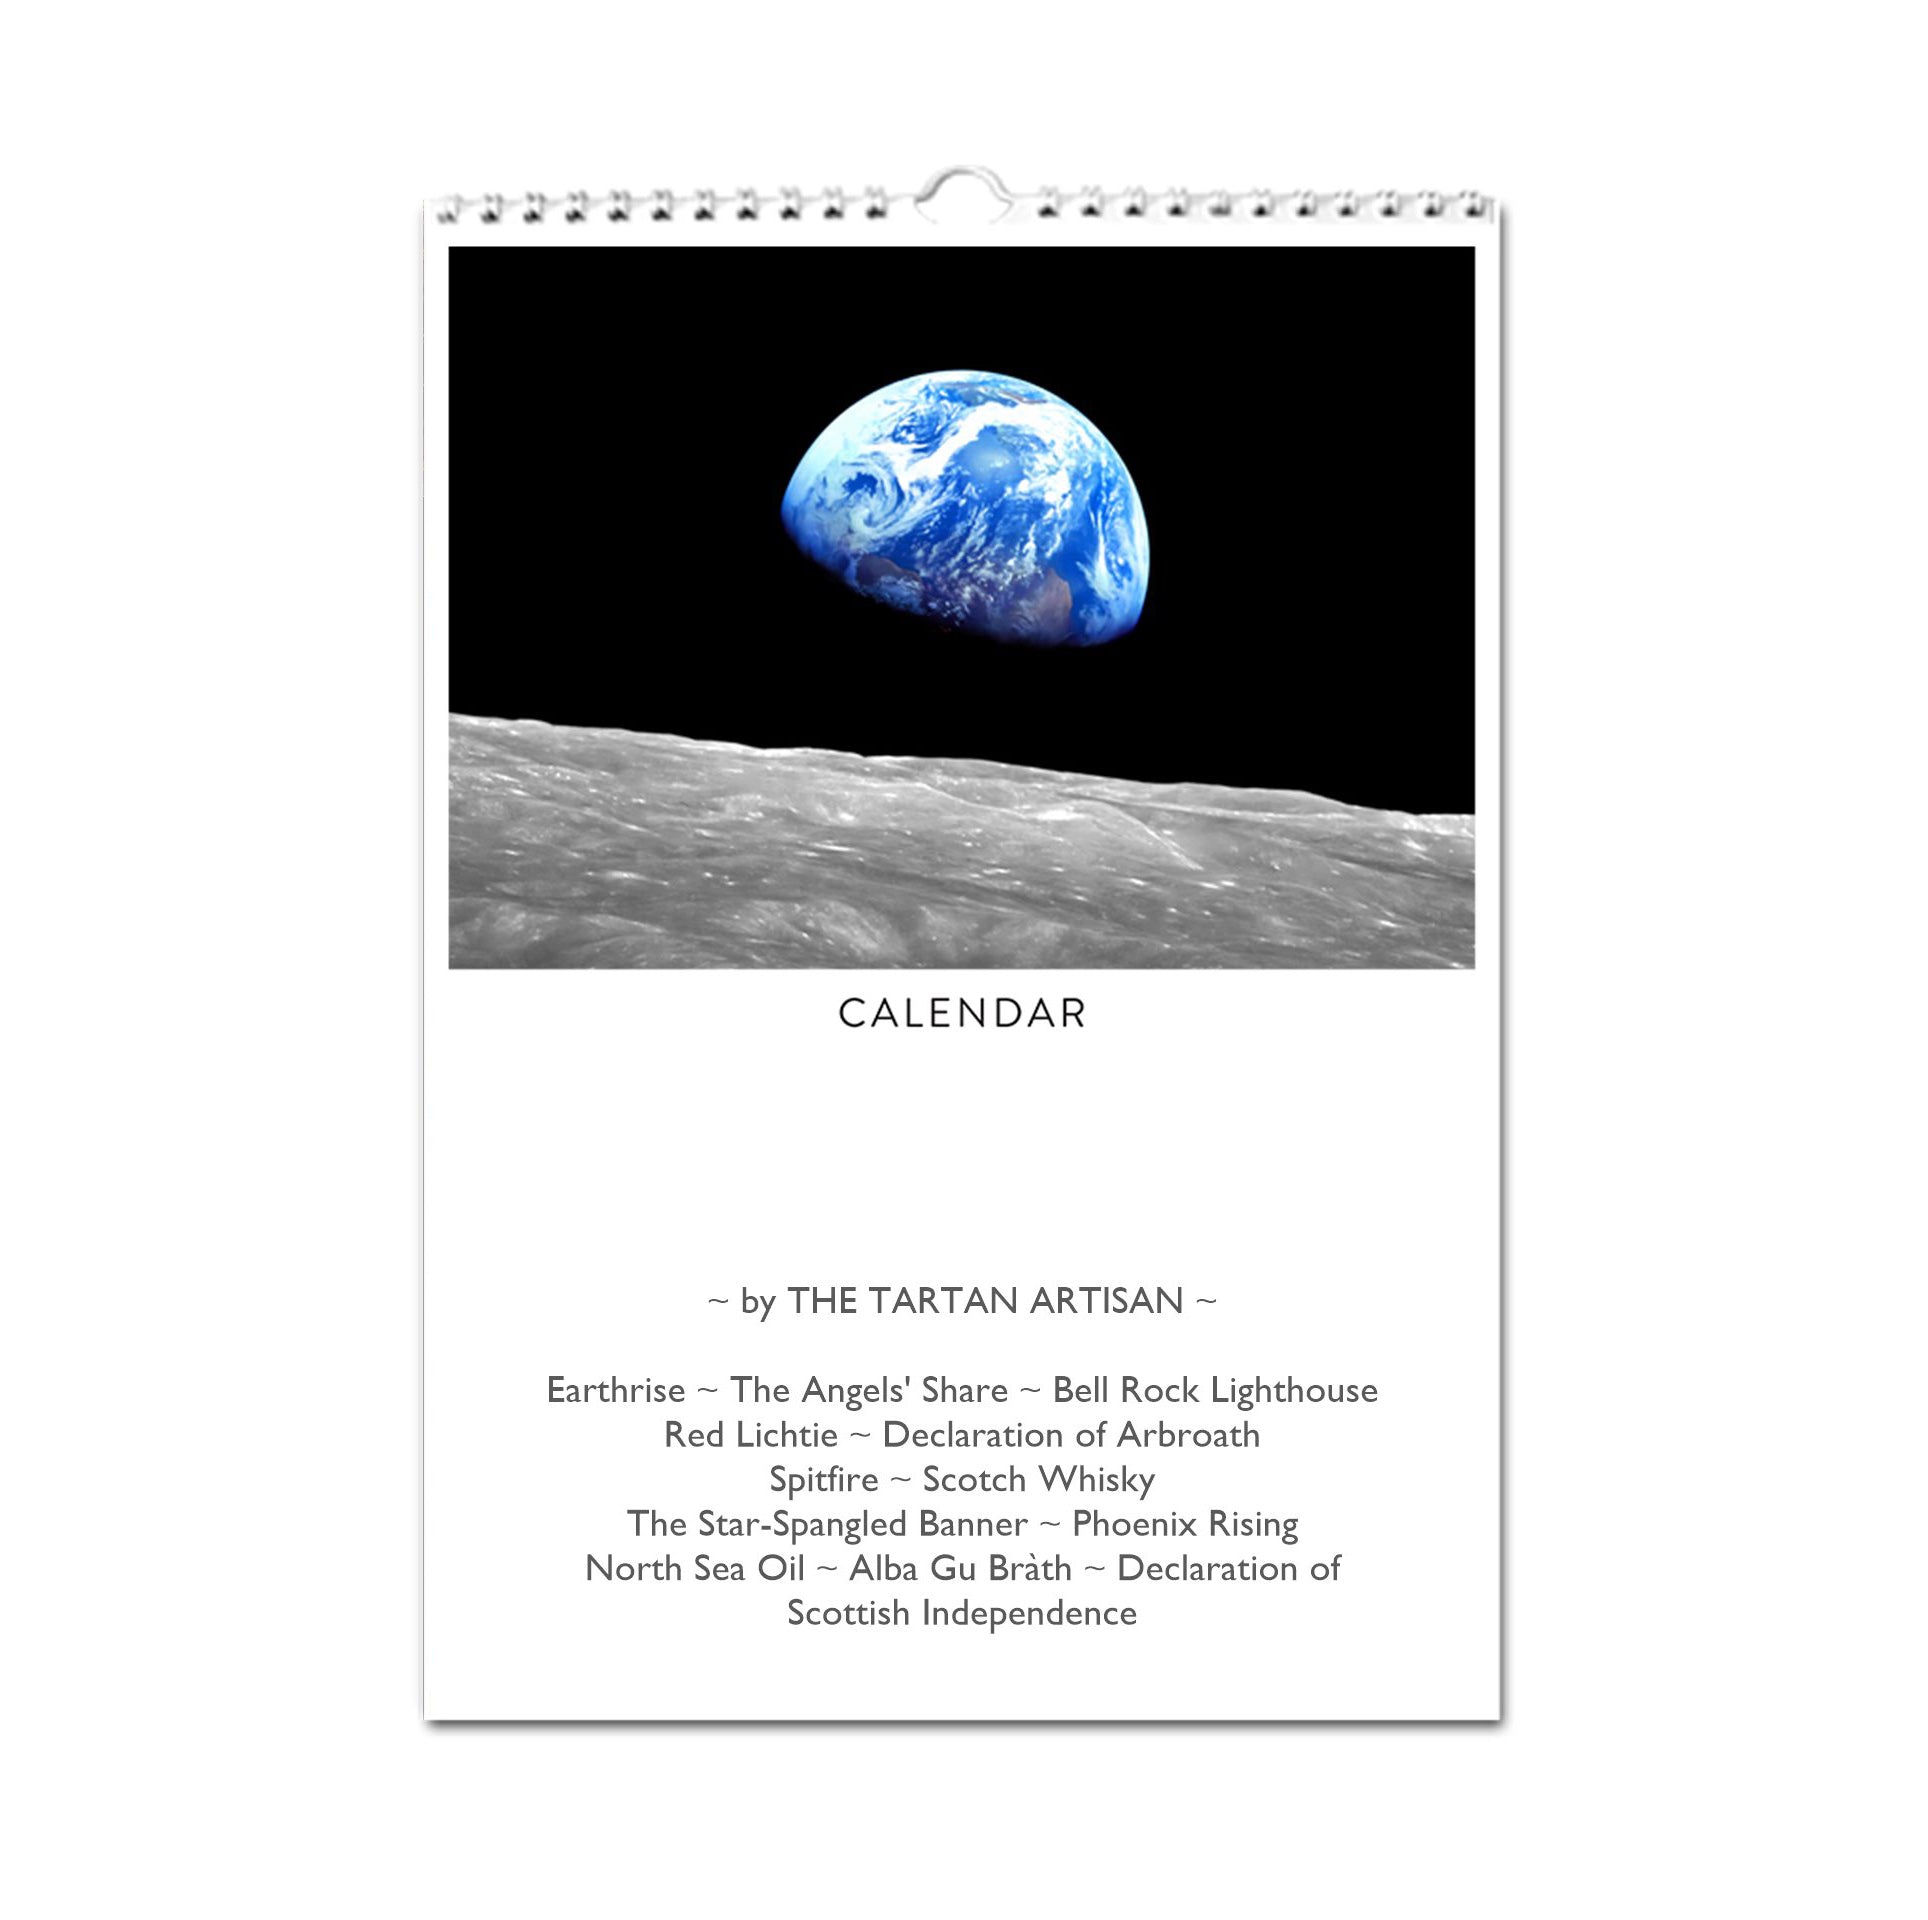 The Tartan Artisan perpetual CALENDAR - Earthrise Edition, featuring the famous photograph